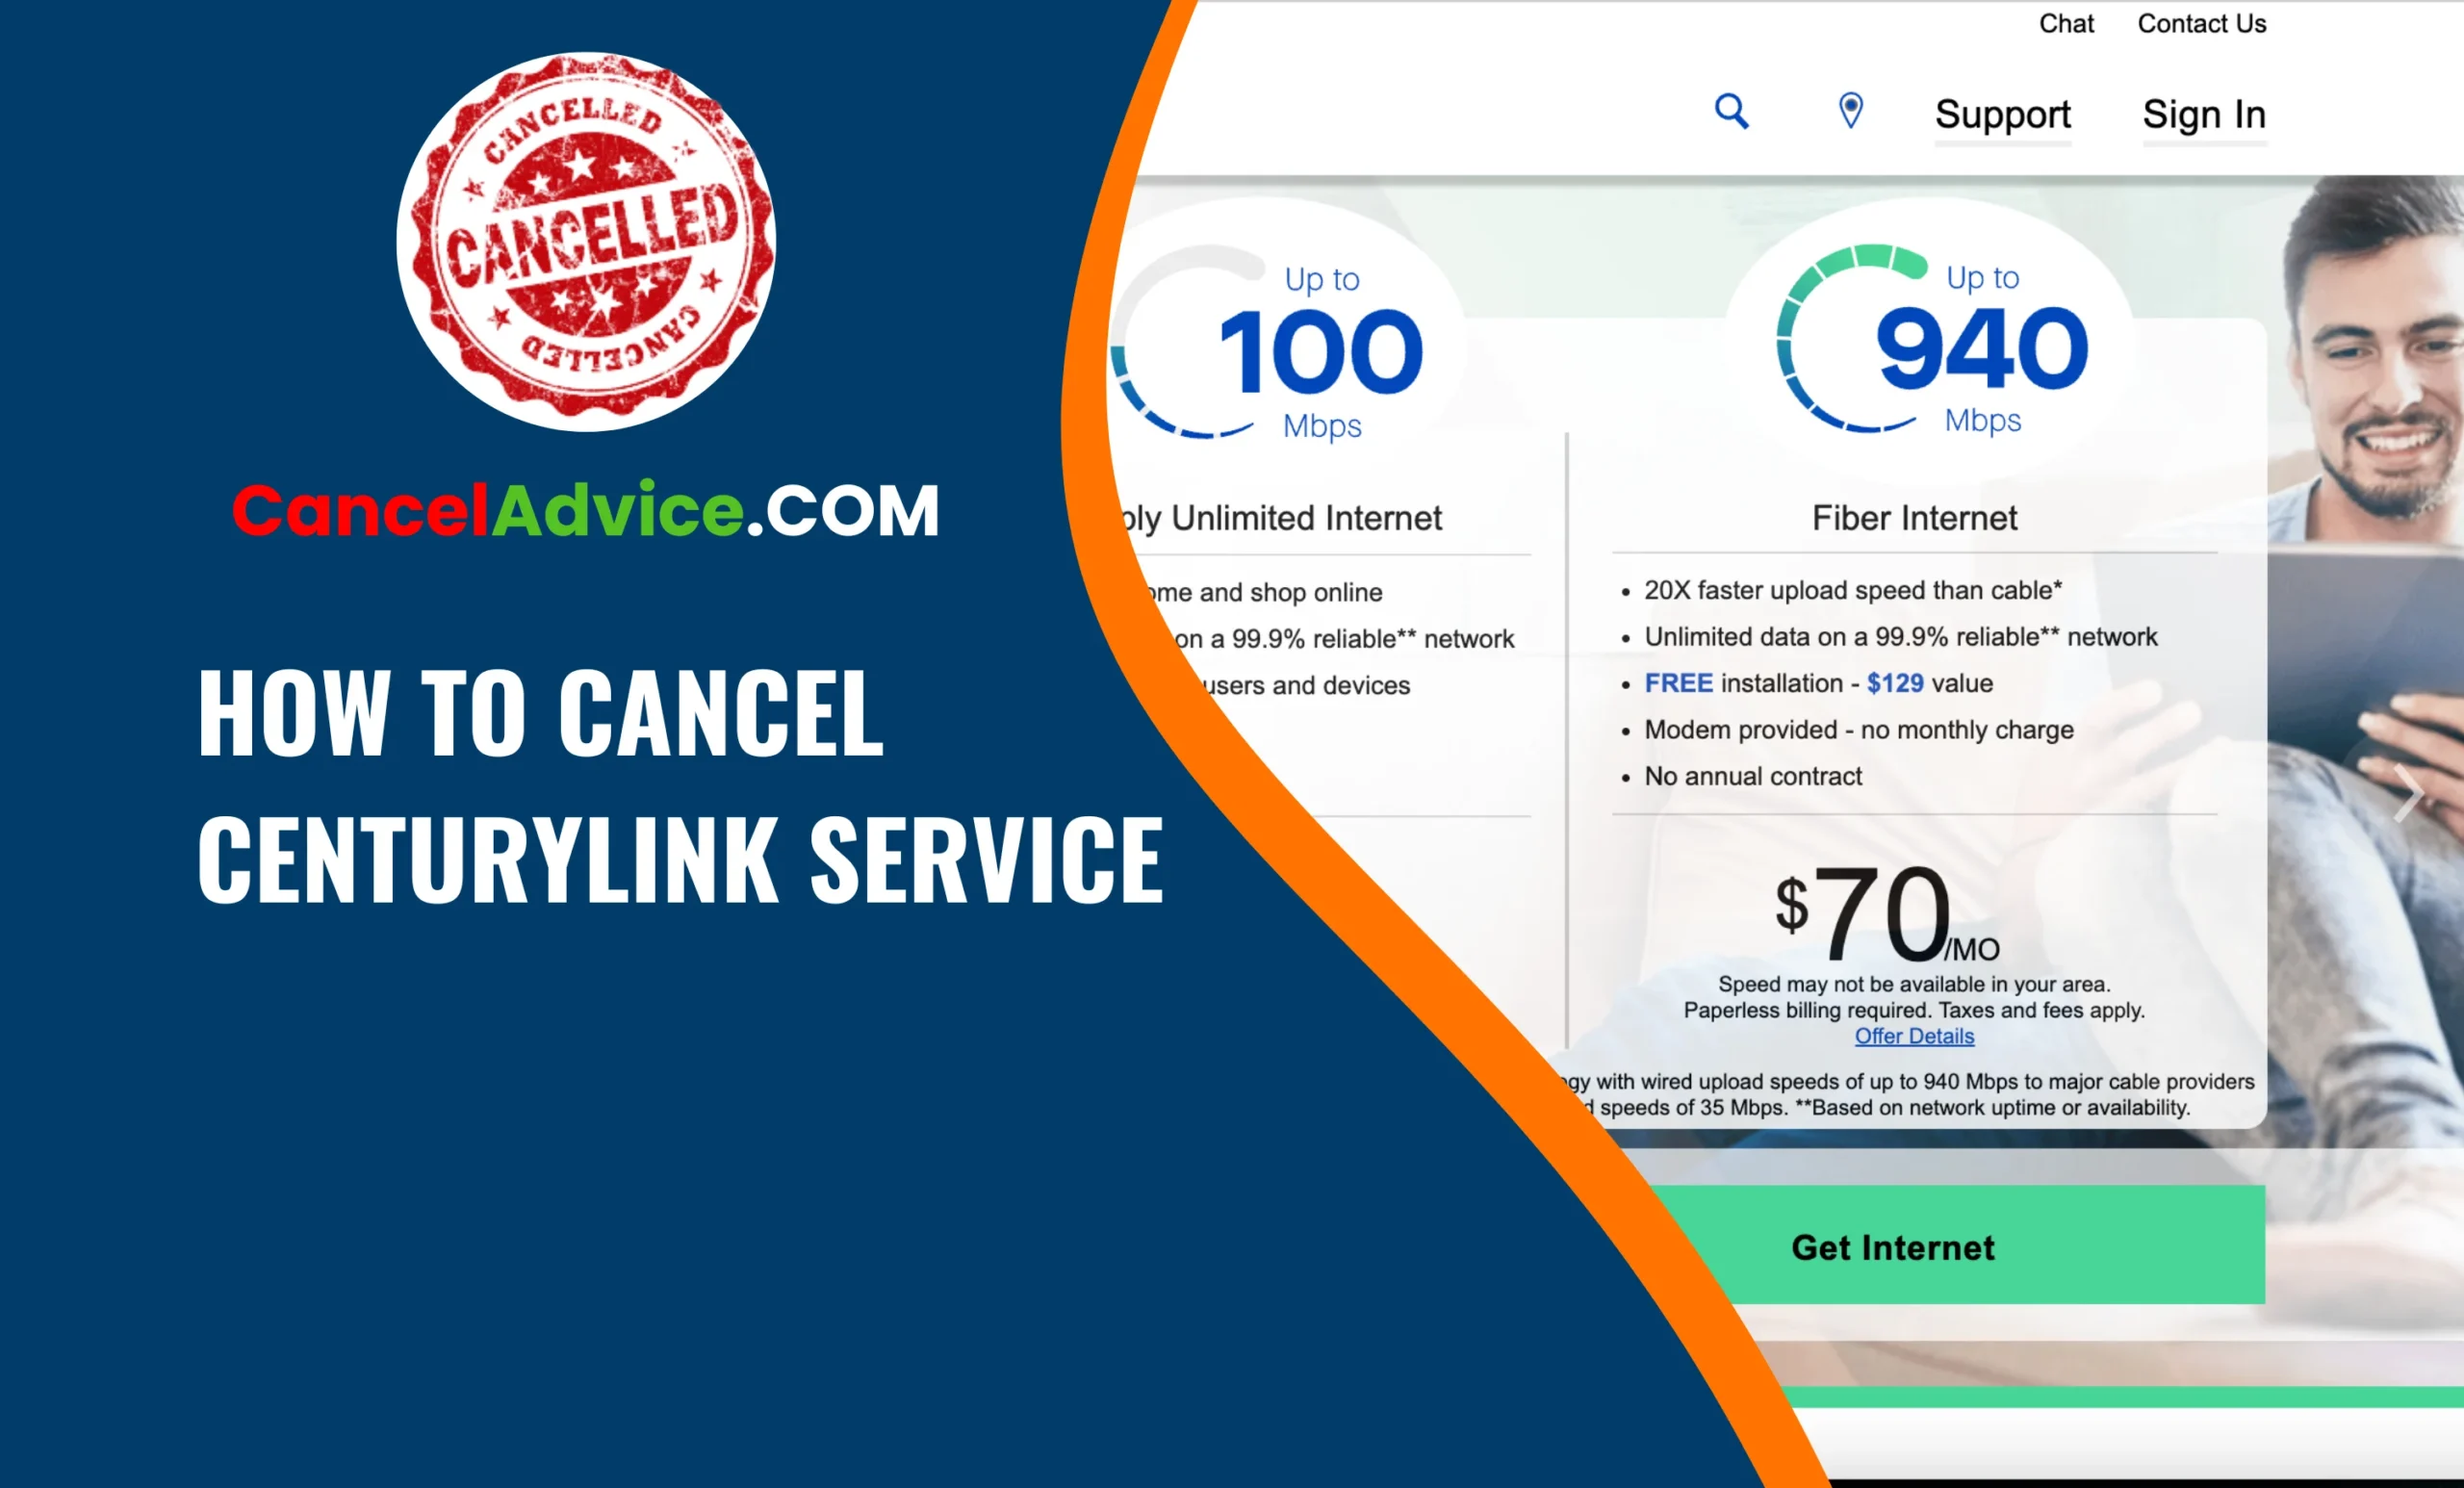 How to Cancel CenturyLink Service